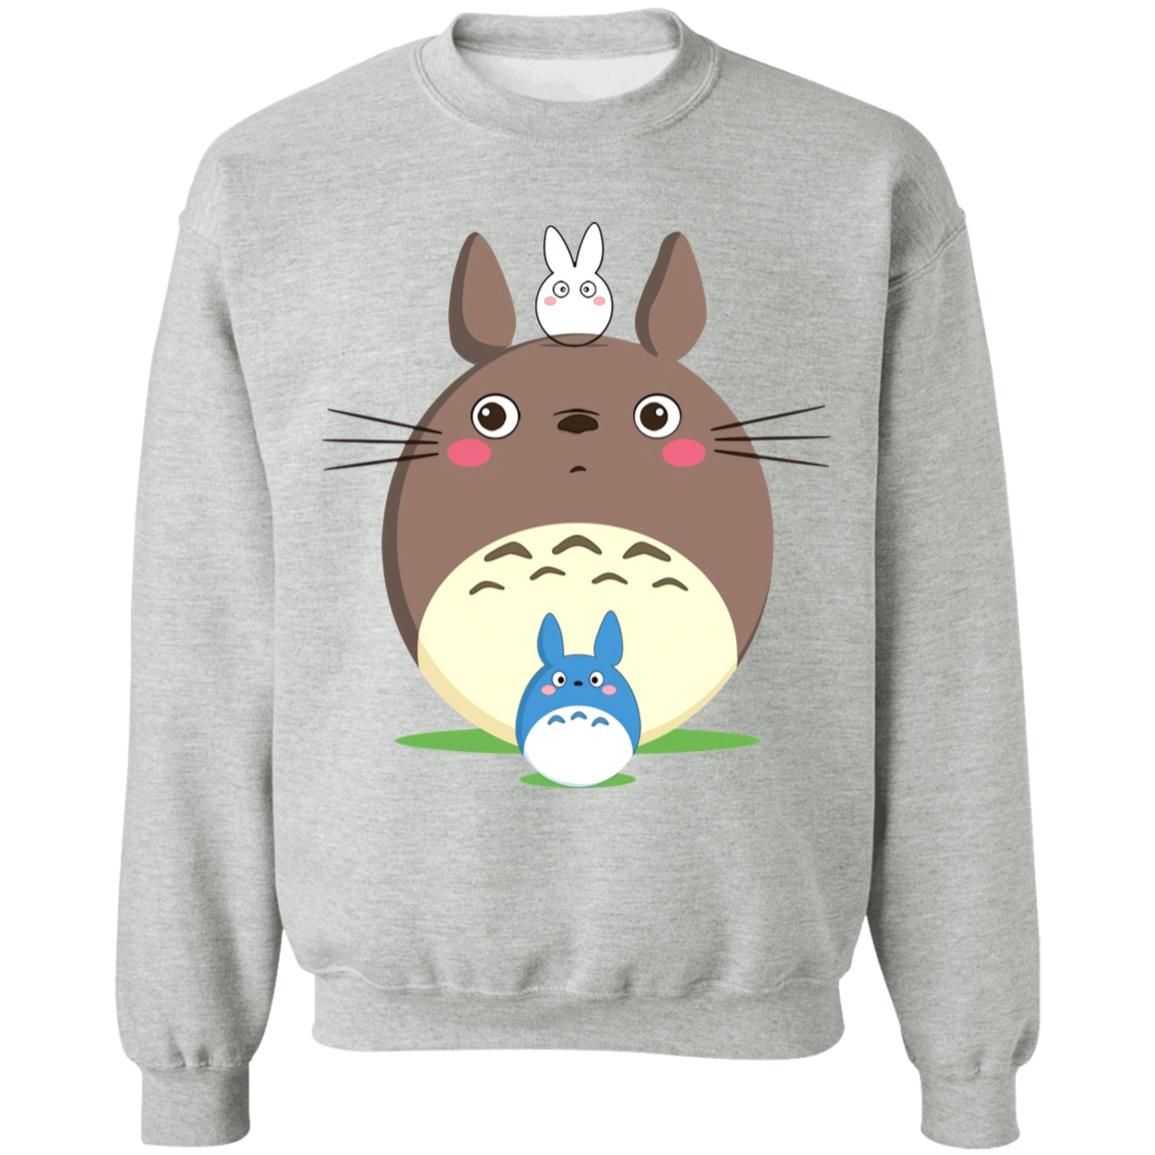 Circle Totoro Sweatshirt